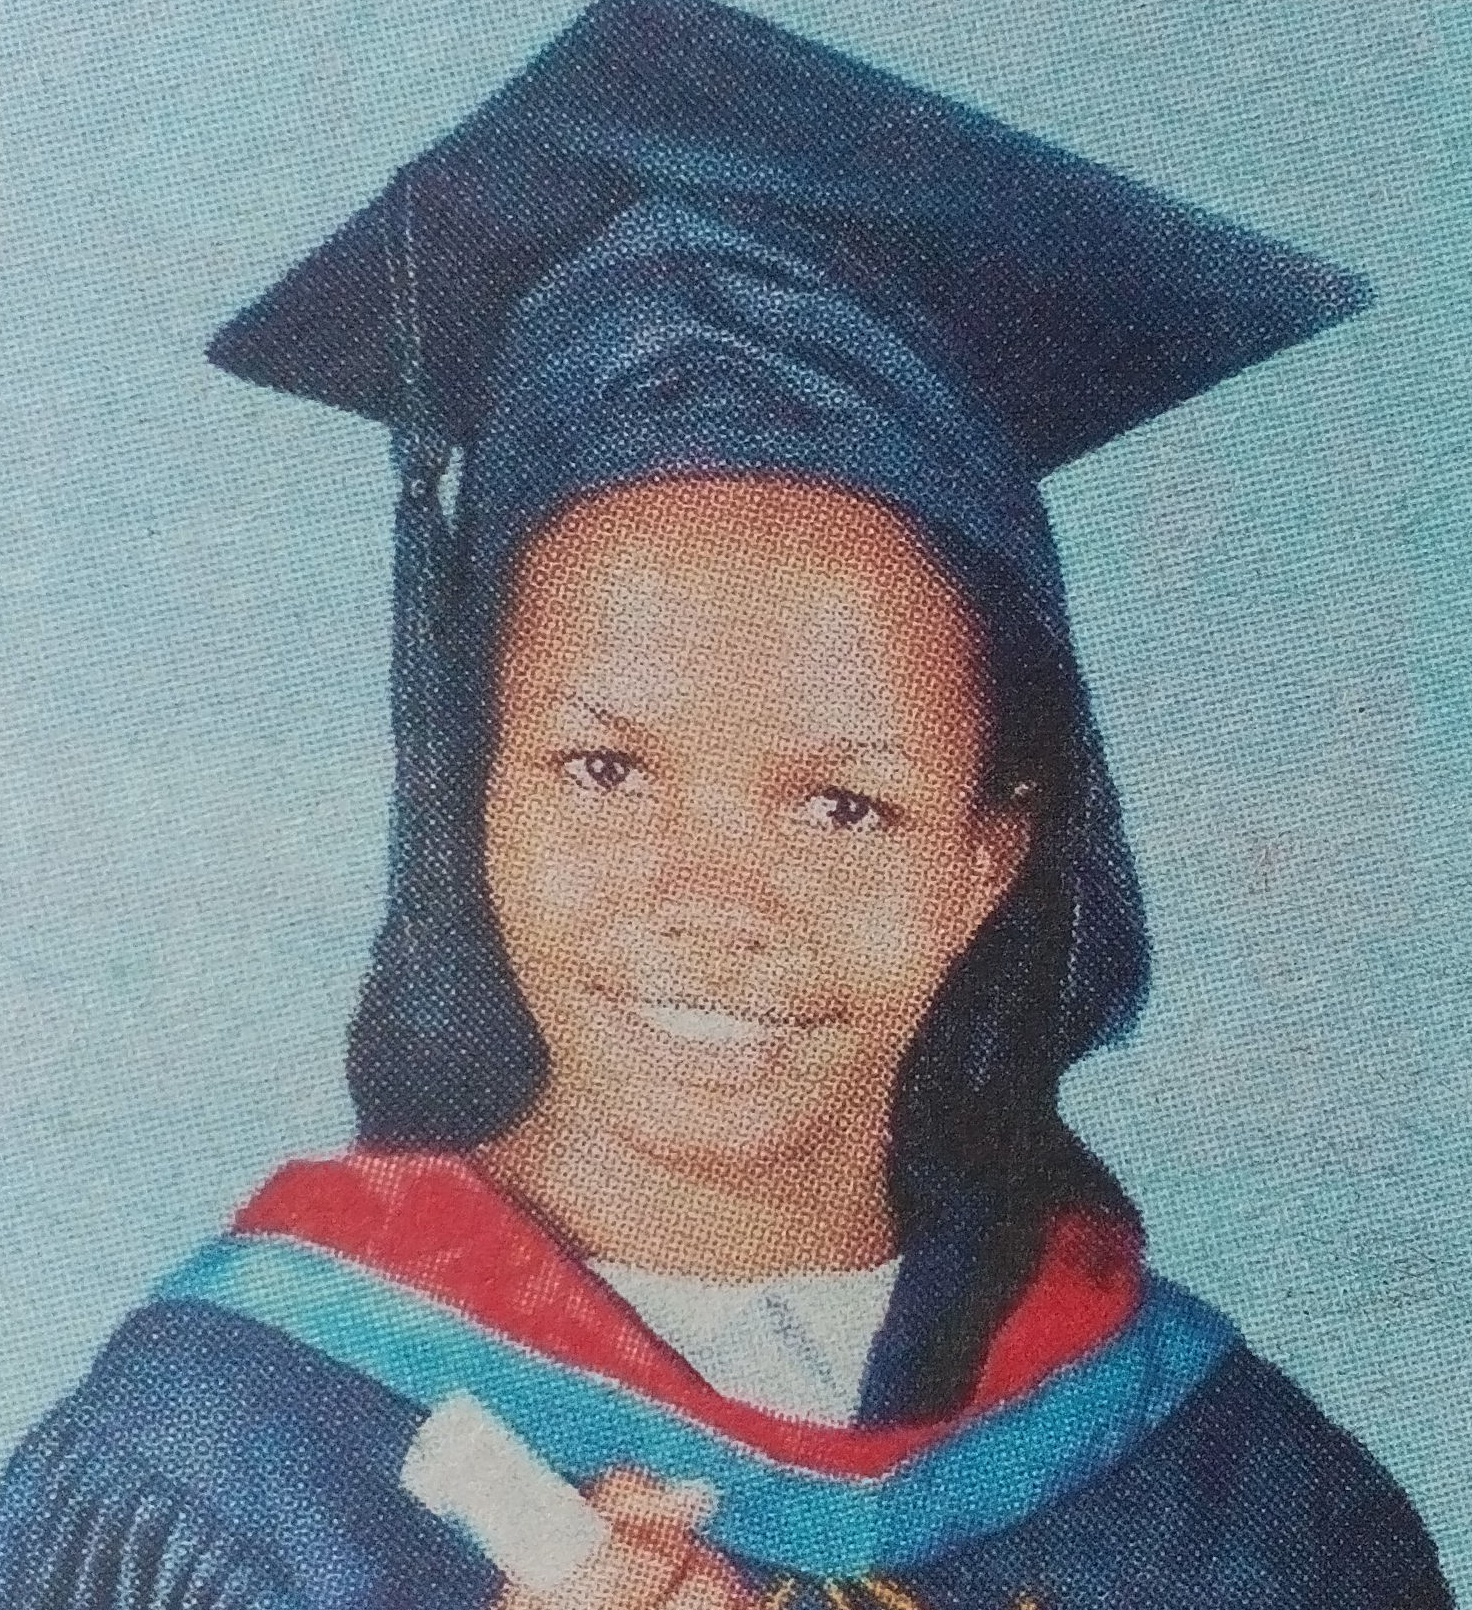 Obituary Image of Dr Beth Mukami Mworia